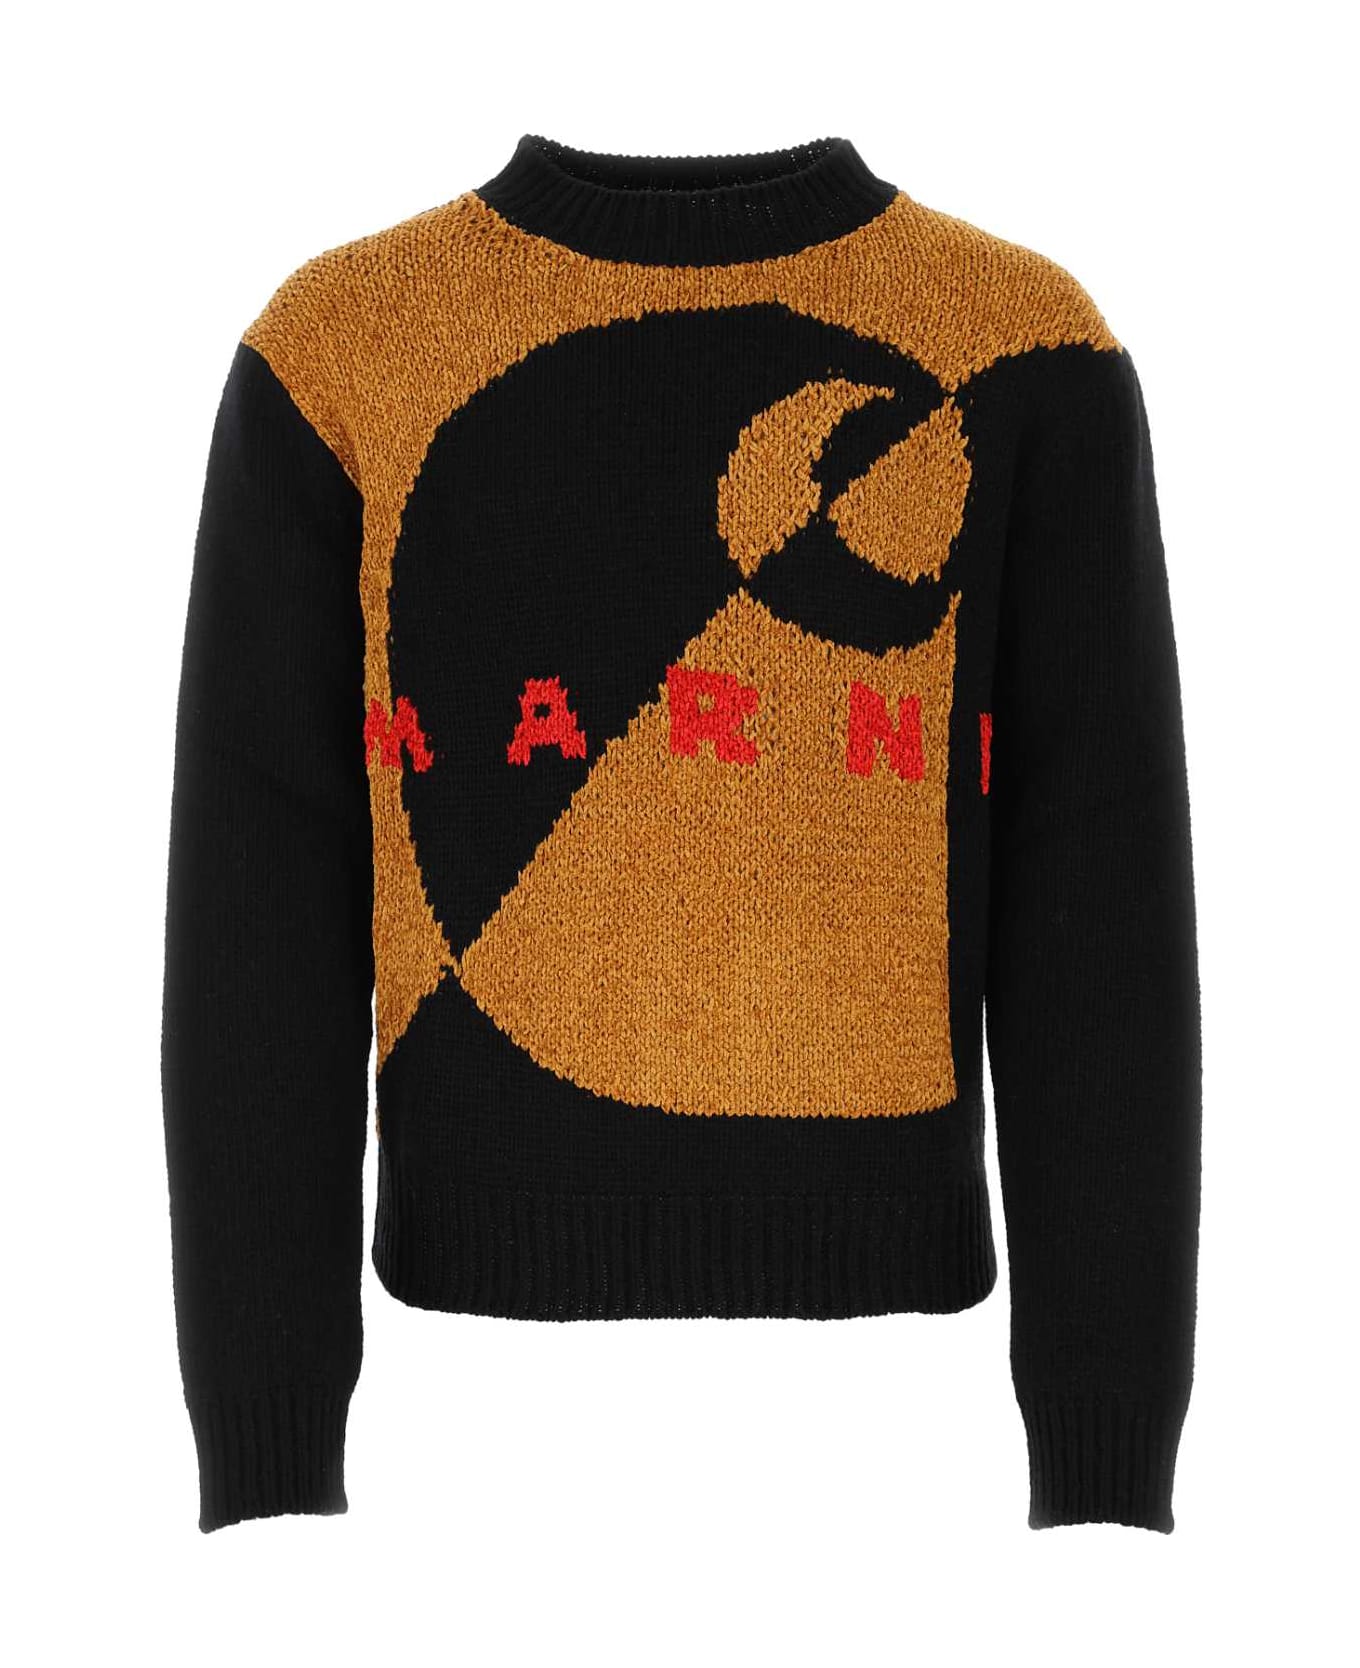 Marni Black Wool Blend Sweater - INN99